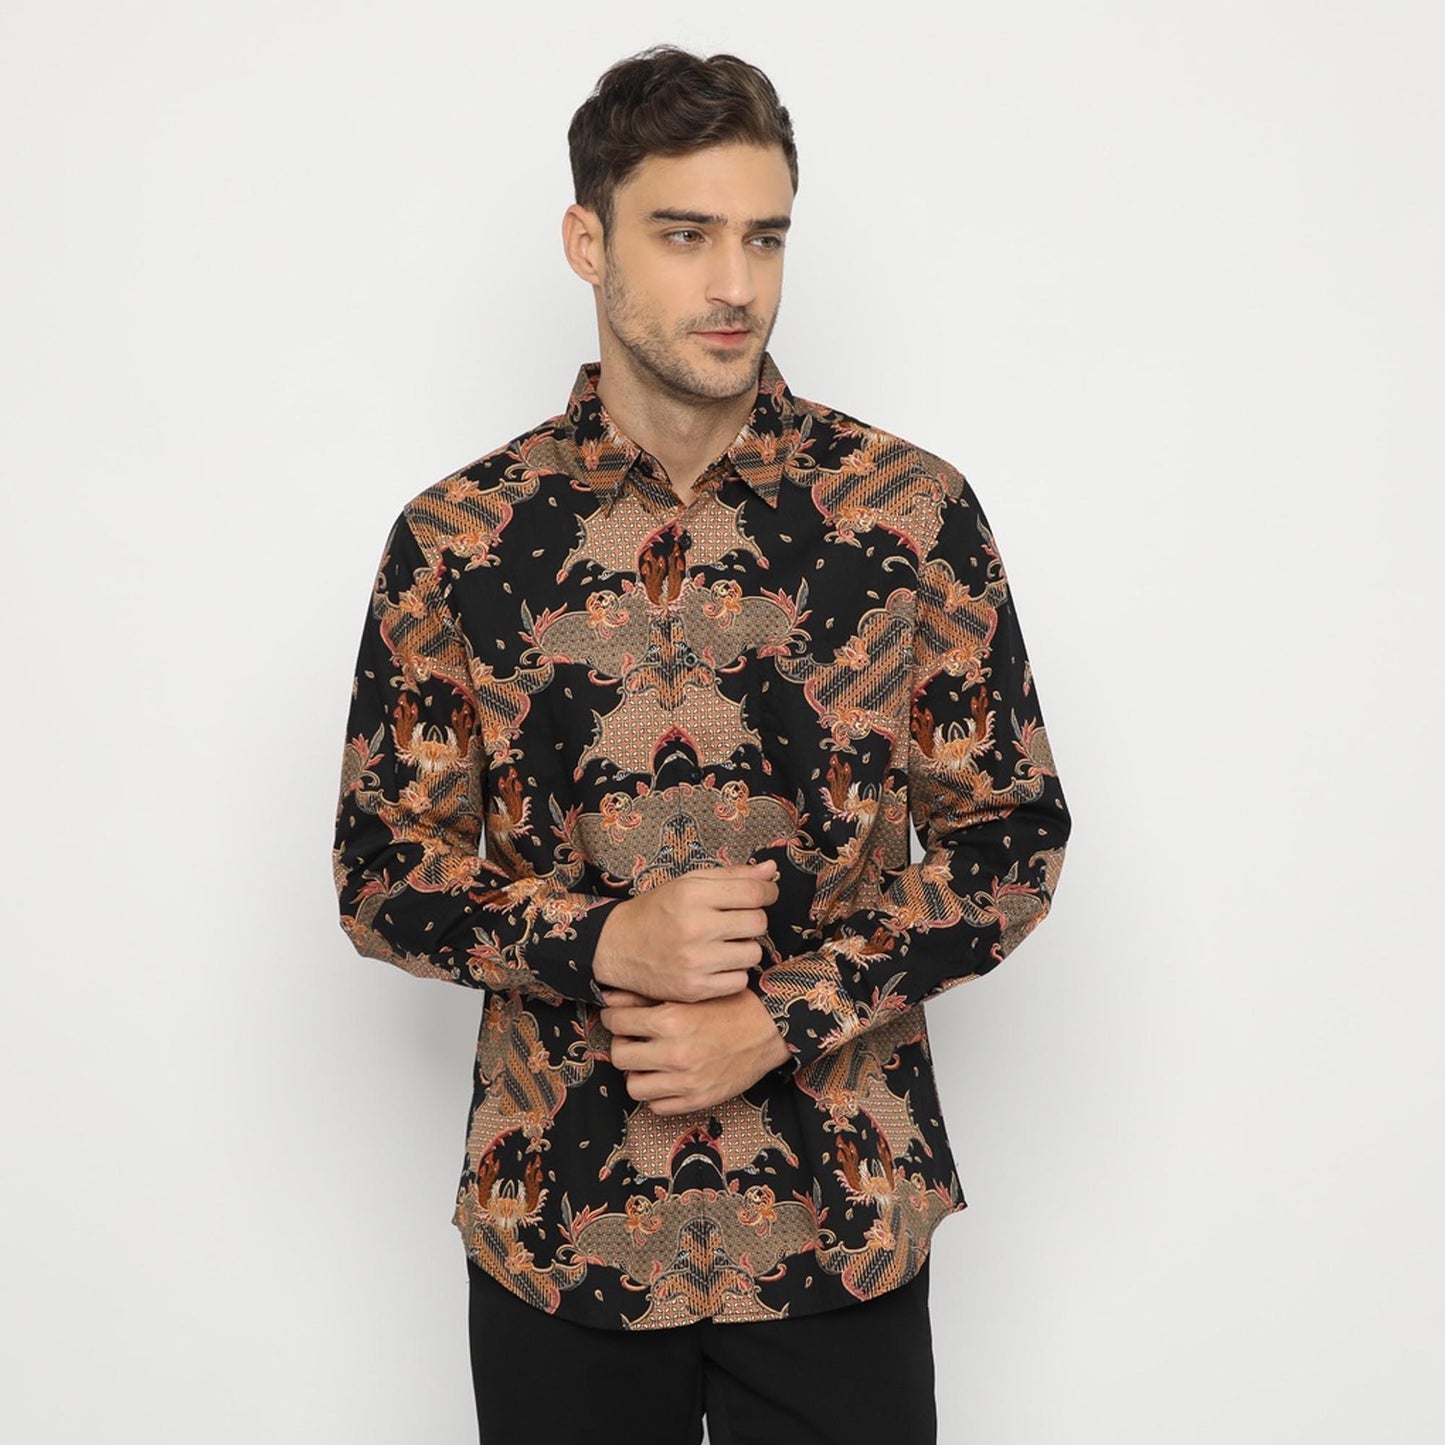 Modern Batik Style: Black Men's Shirt with Long Sleeves, Stylish Men, Men Batik, Batik Shirt, Formal Shirt For Men